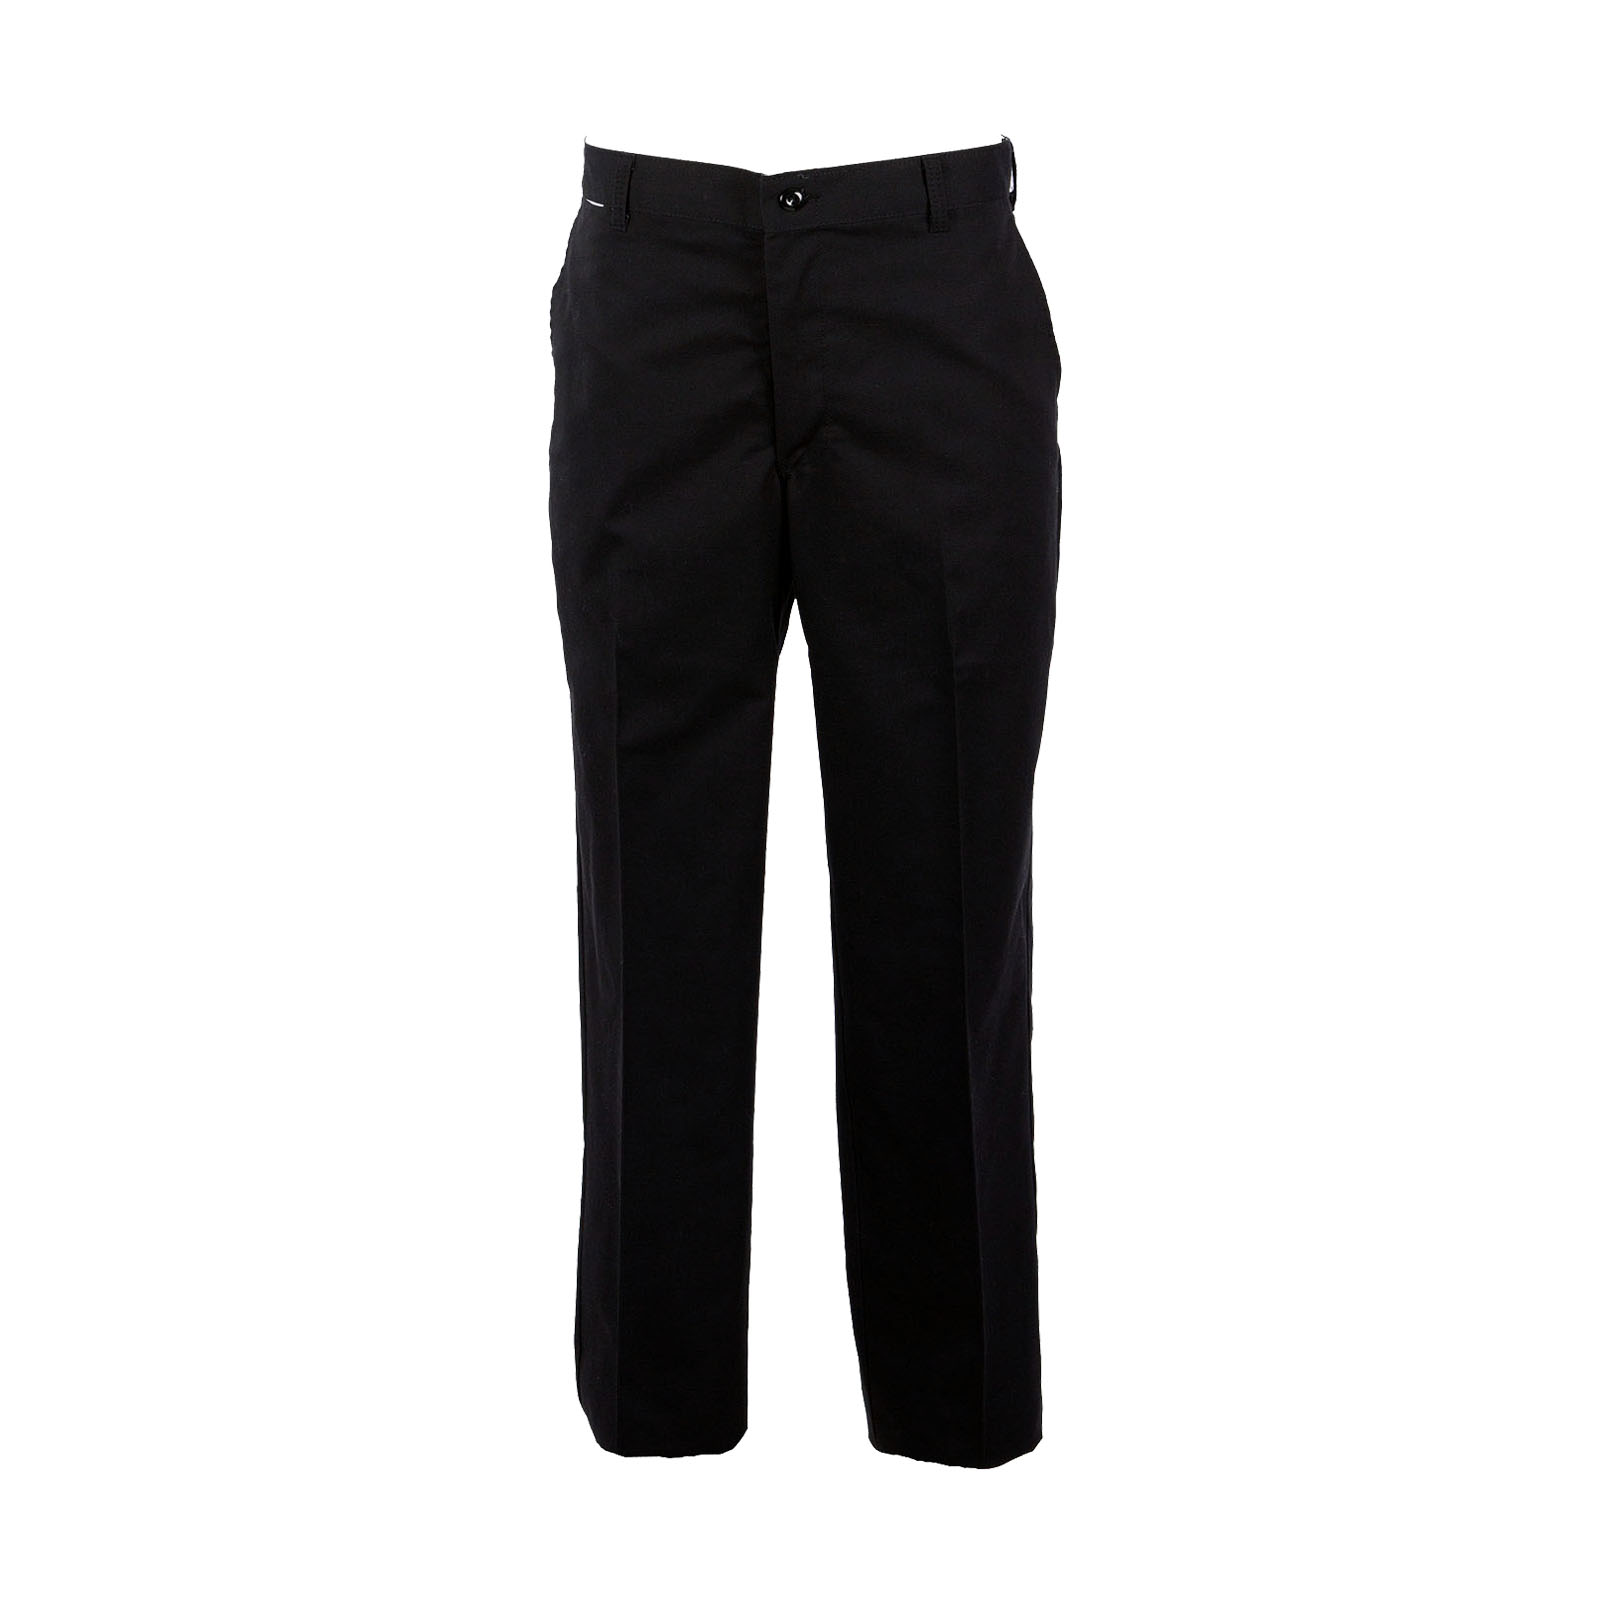 P100BK - Black Chef Pant, Zipper, 65/35 Twill - ASAP Linen